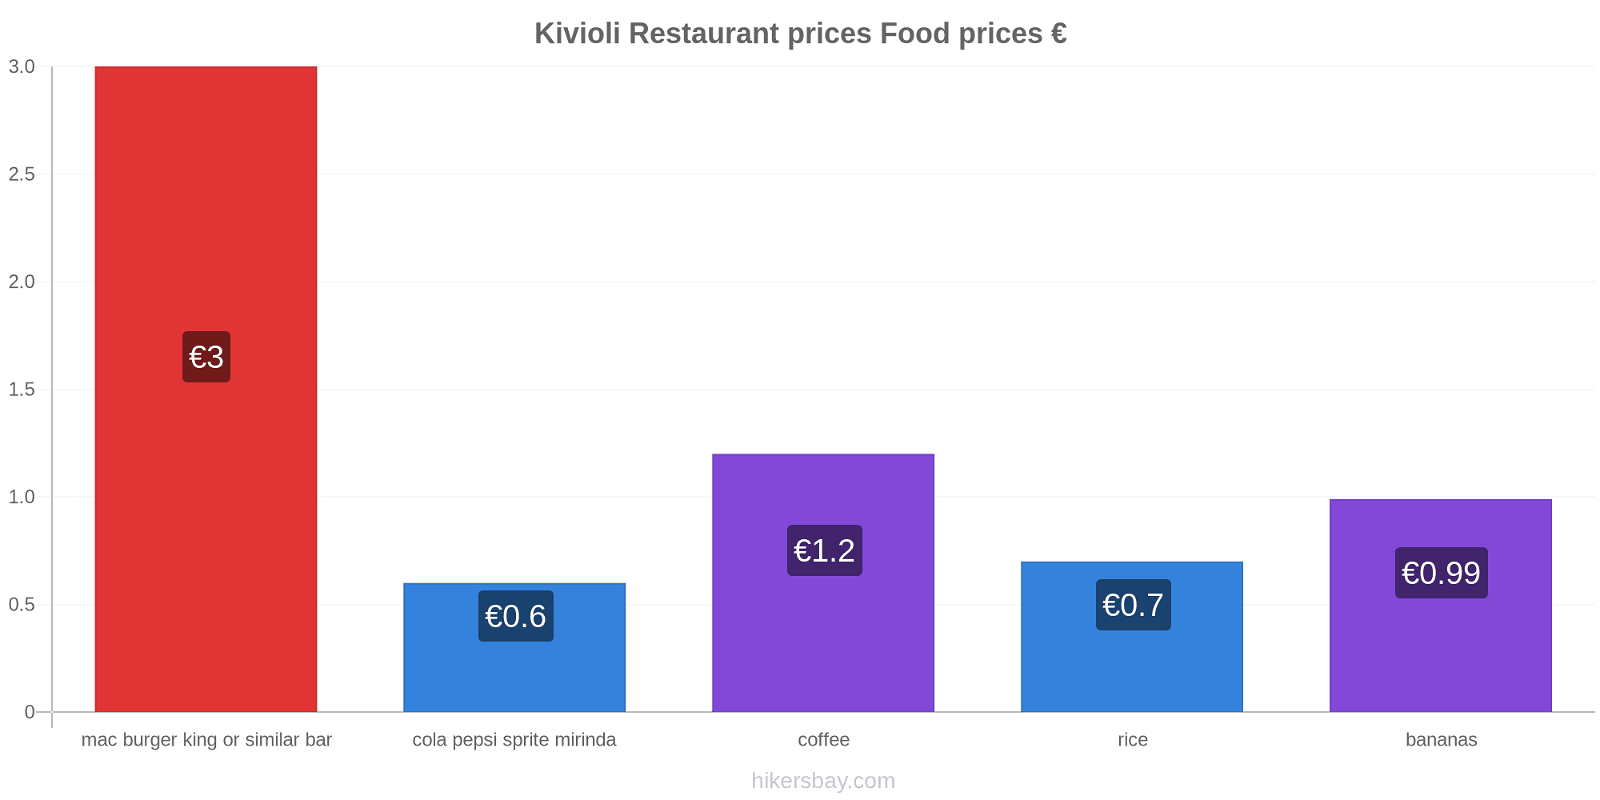 Kivioli price changes hikersbay.com